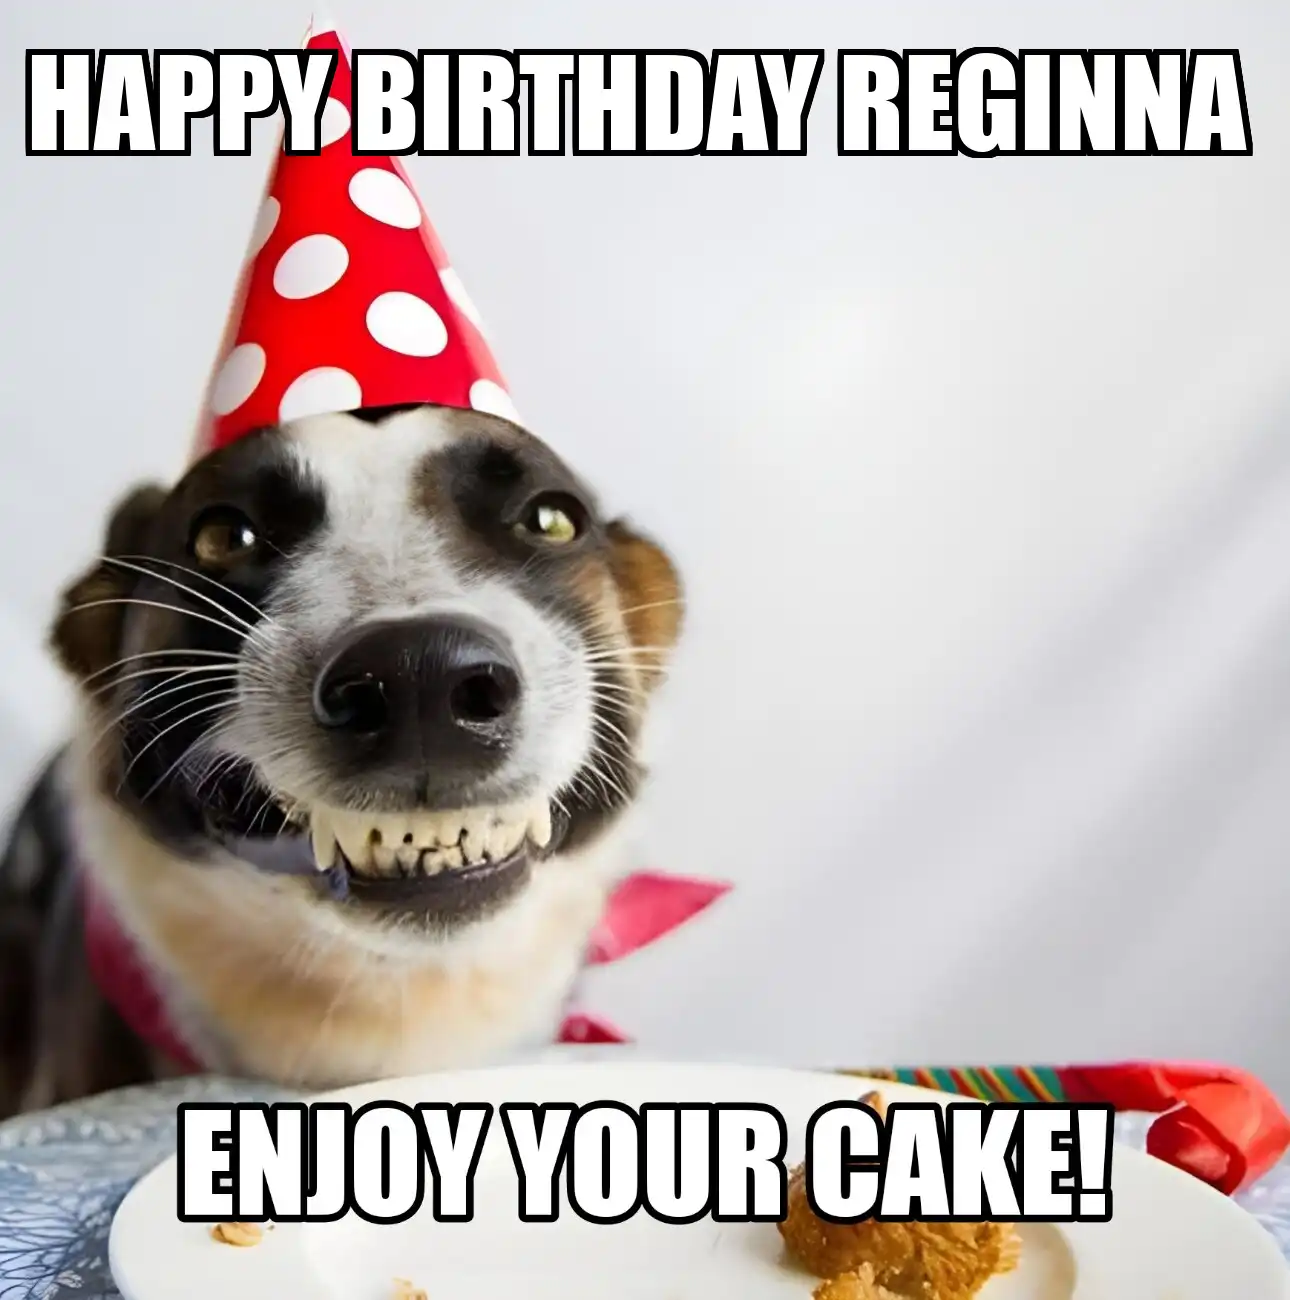 Happy Birthday Reginna Enjoy Your Cake Dog Meme